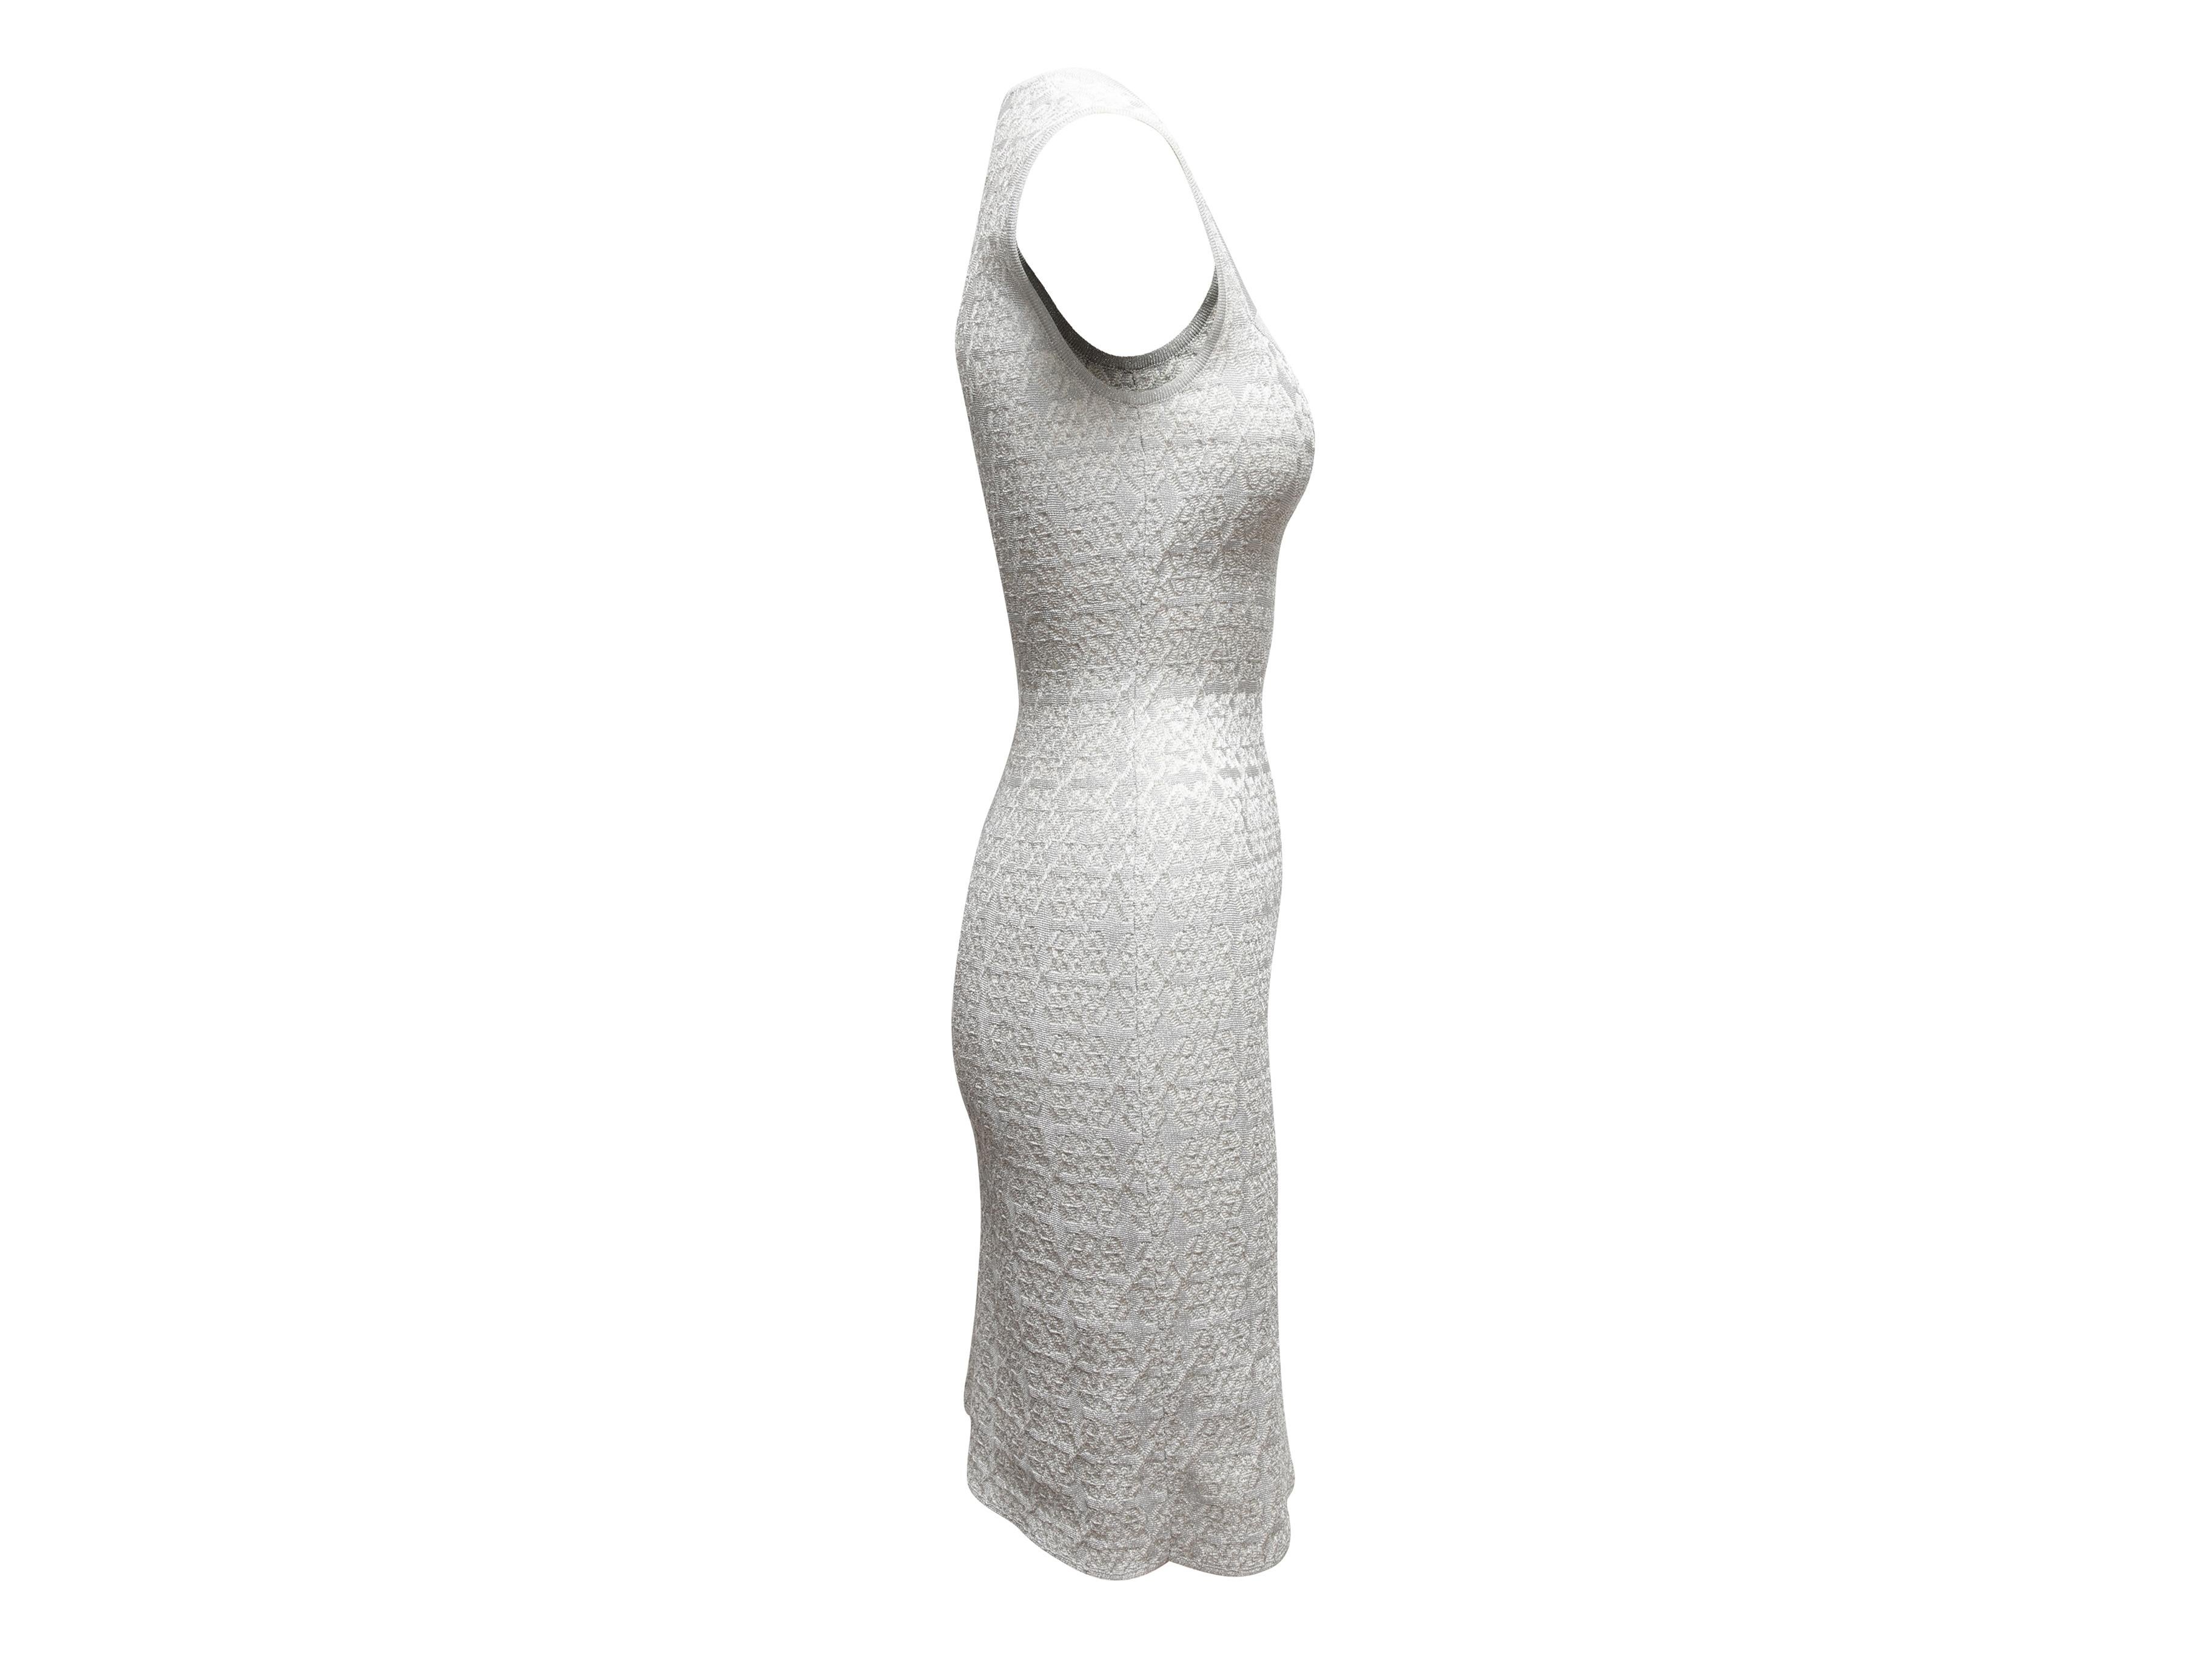 Women's Silver Alaia Knit Sleeveless Dress Size EU 42